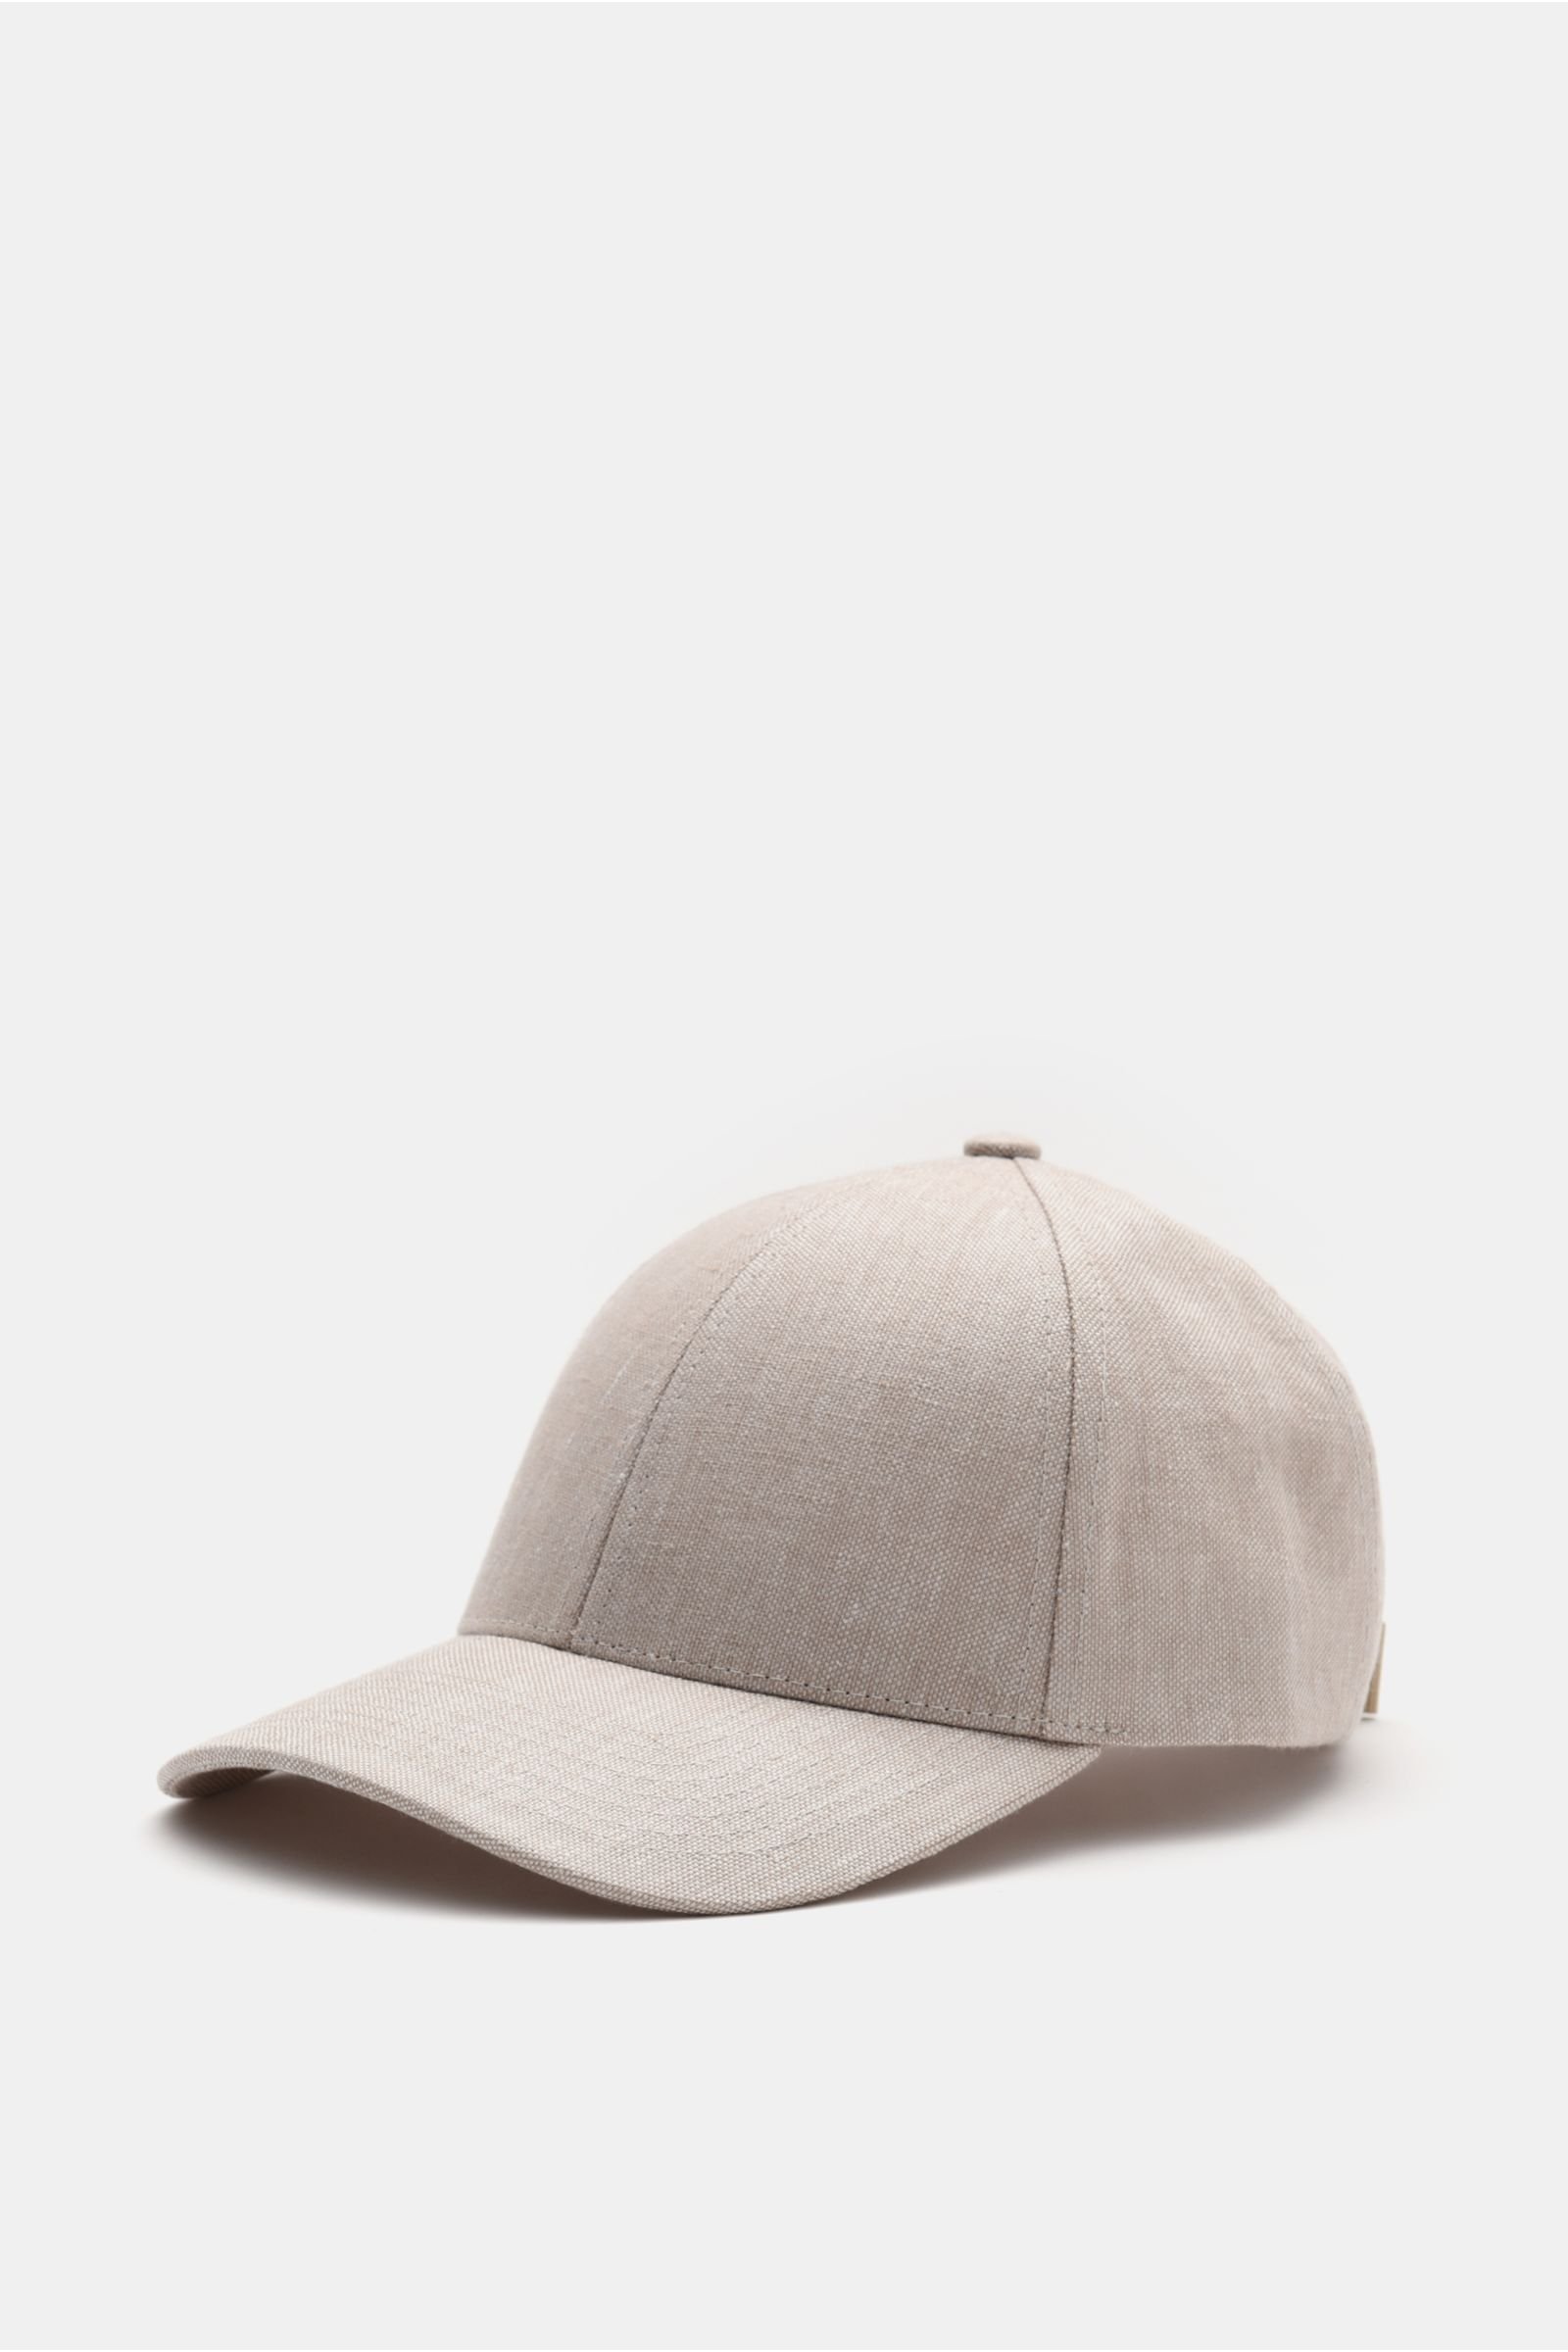 VARSITY HEADWEAR baseball cap linen | Hamburg BRAUN beige